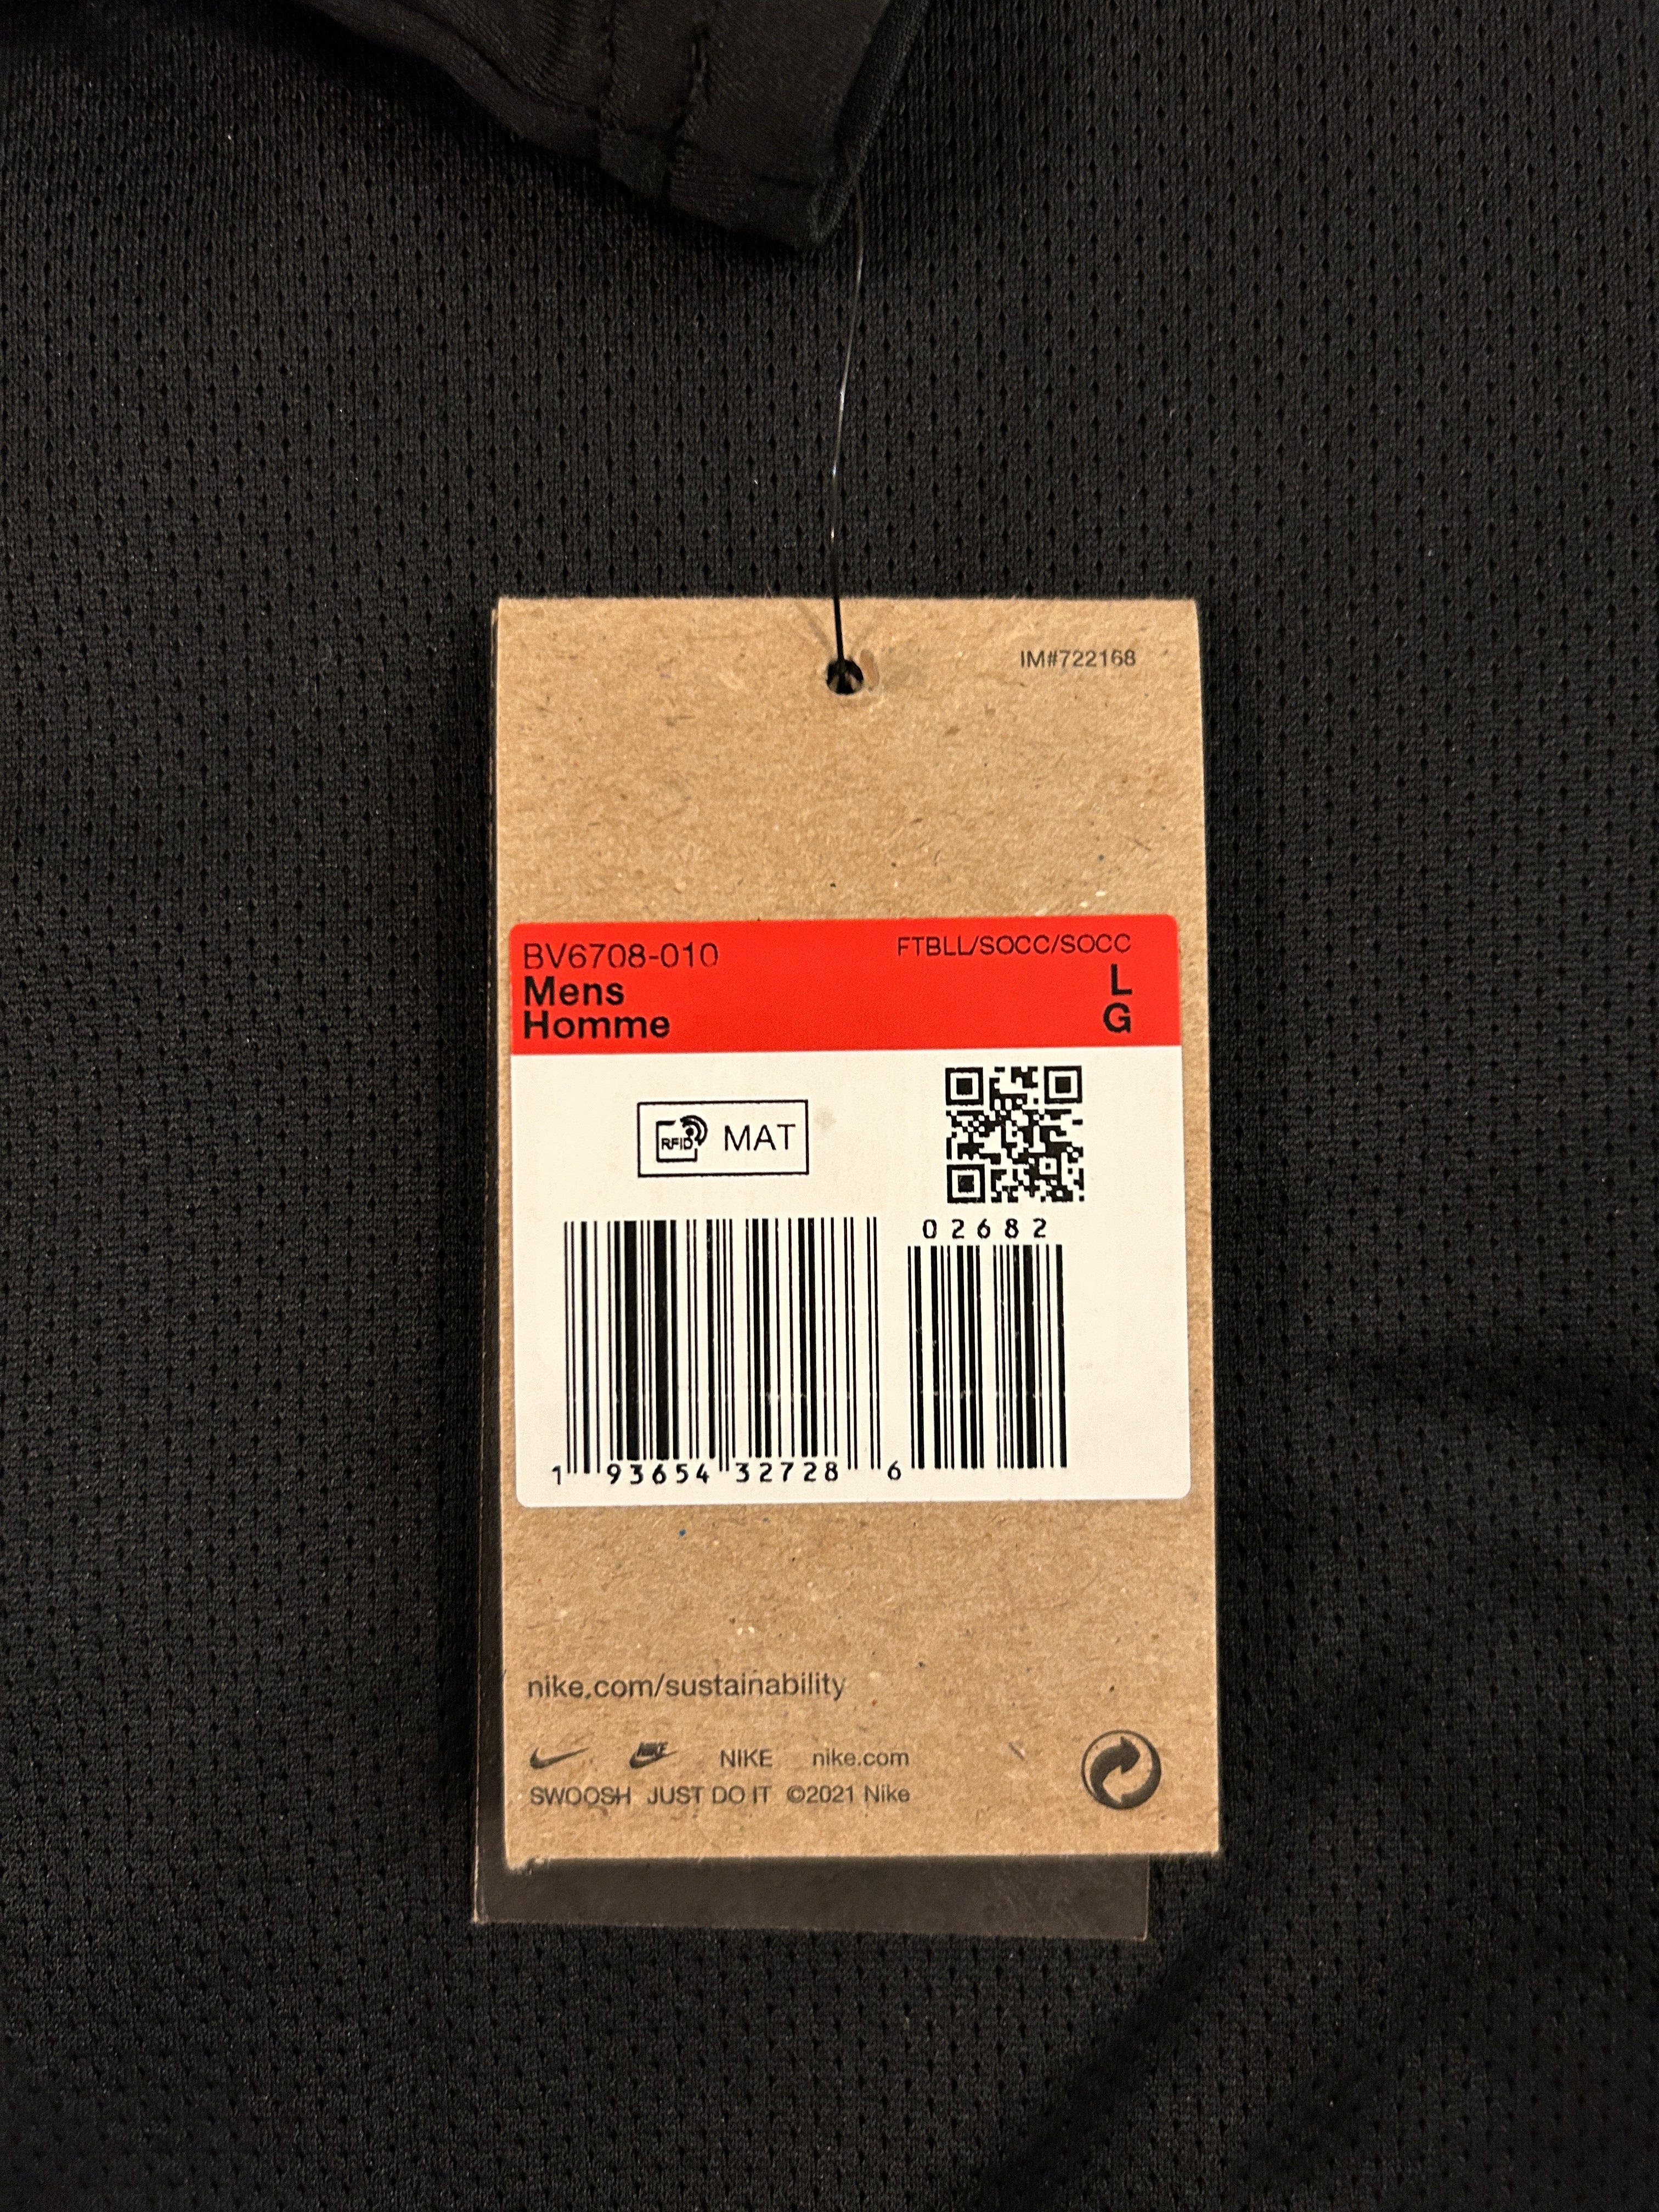 PSG x TwoToneKits Black/White kit